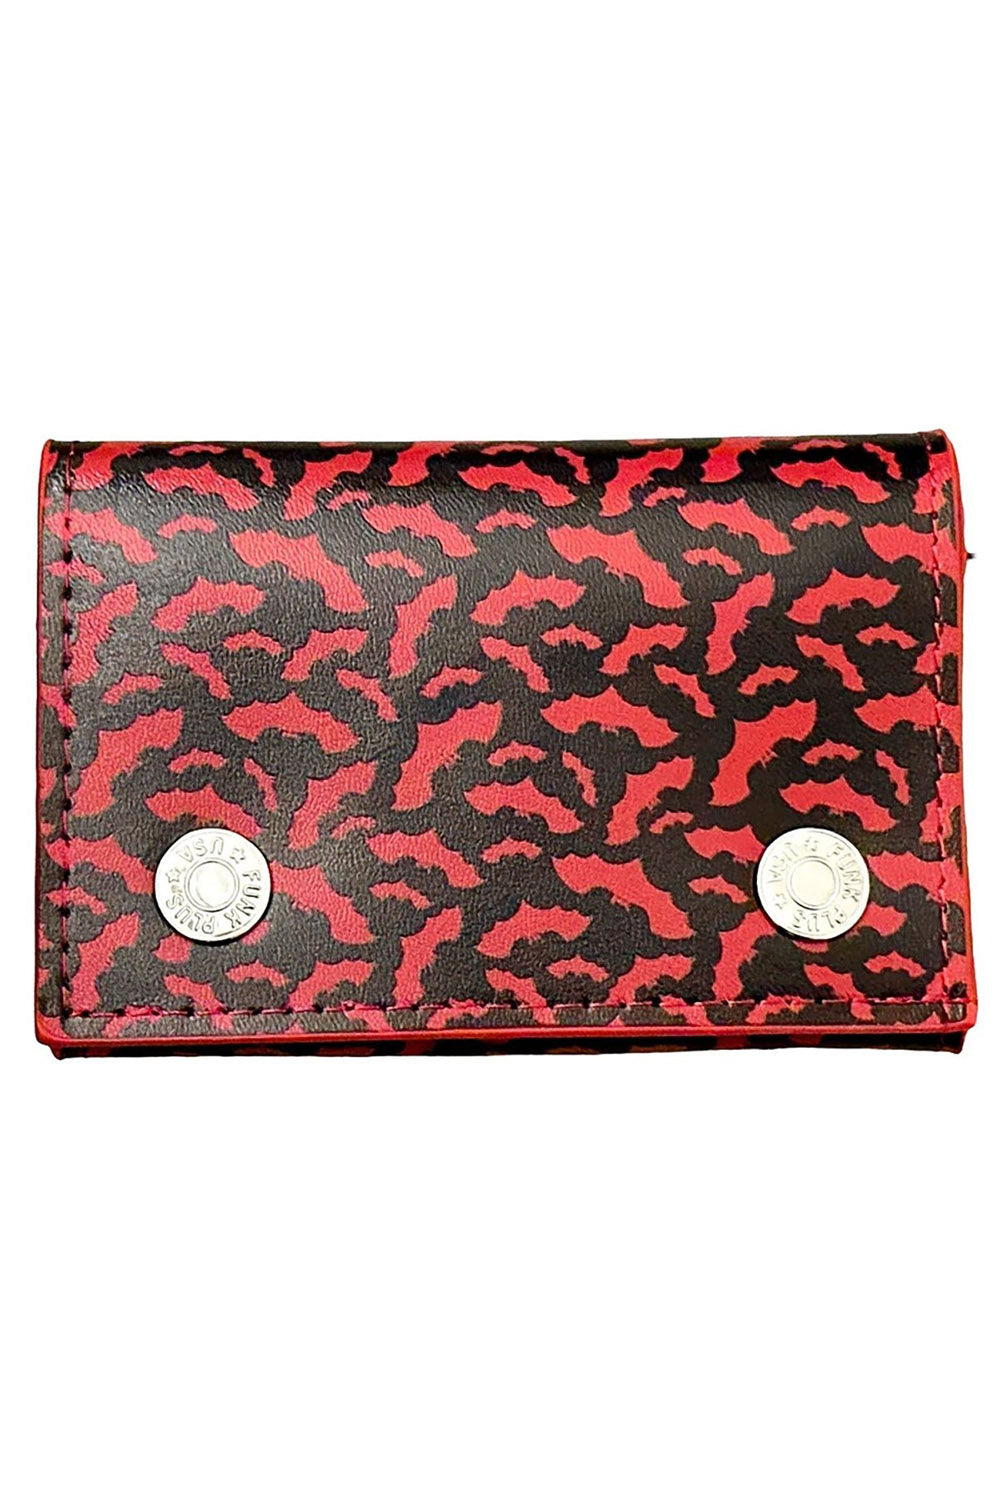 Blood Bat Biker Wallet [RED]